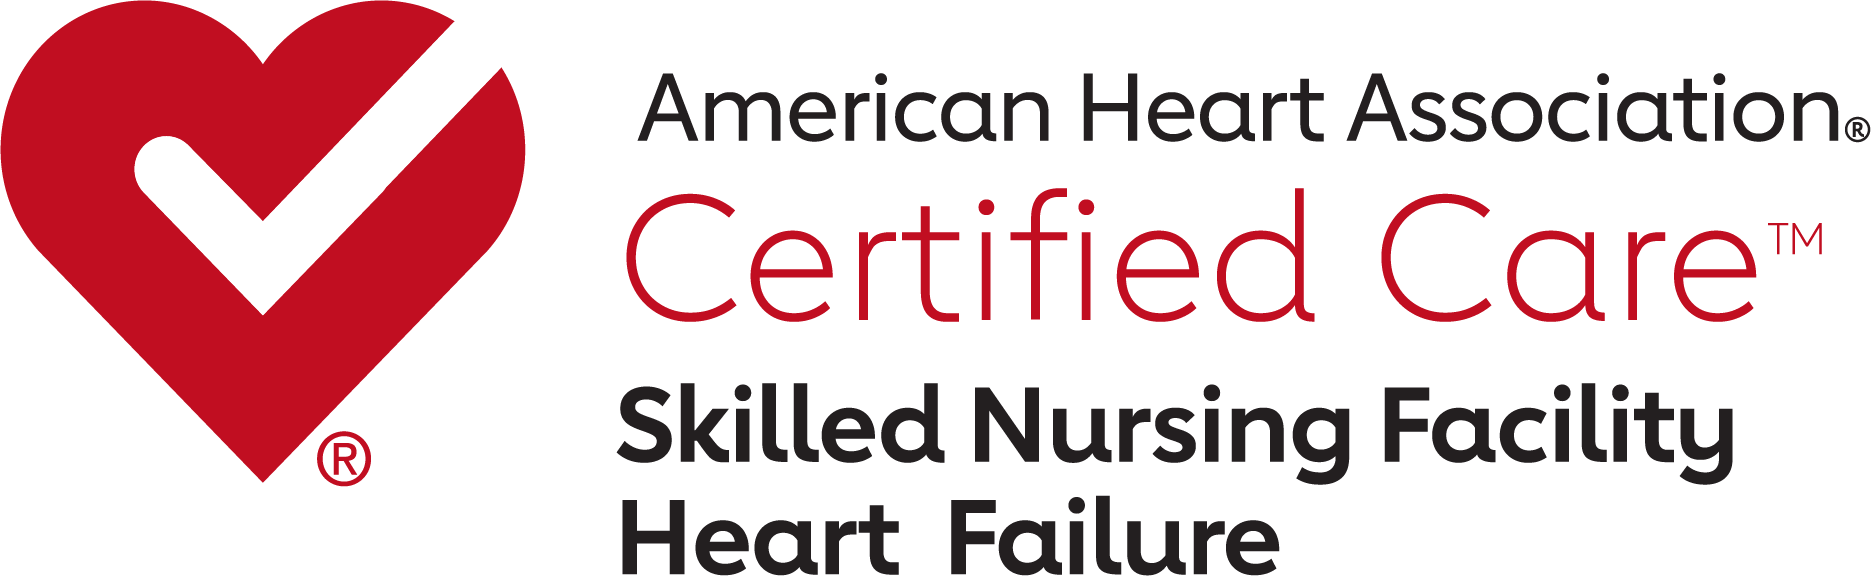 American Heart Association Certified Care_Skilled Nursing Facility_Heart Failure